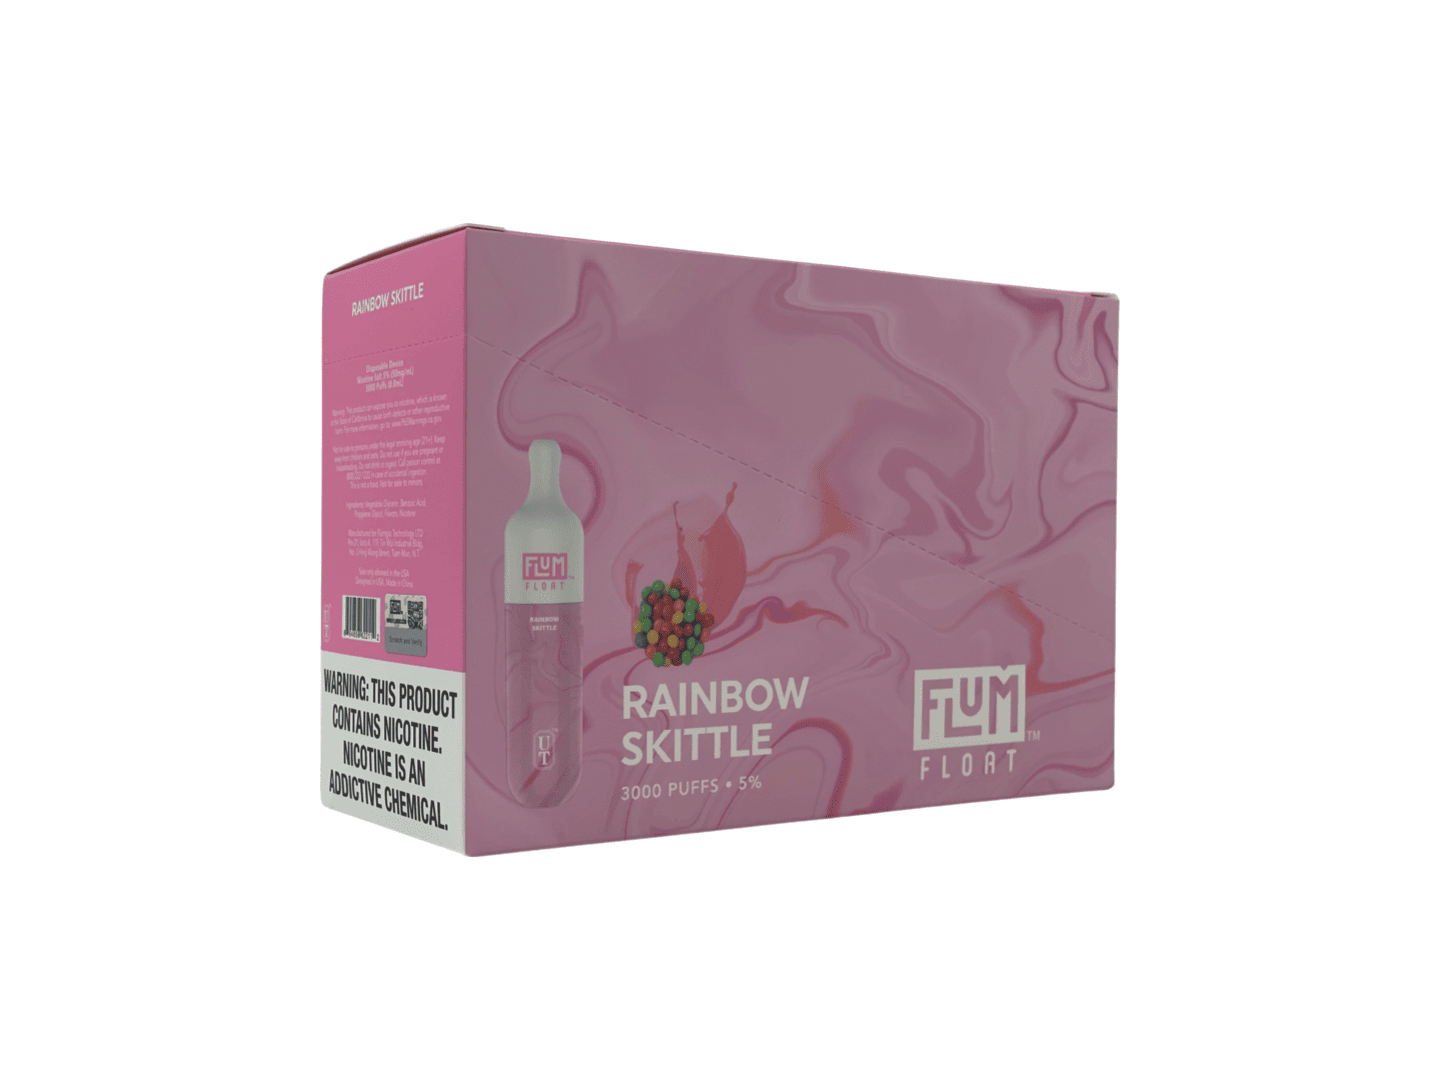 Flum Float Rainbow Skittle Flavor Box / Brick disposable vape